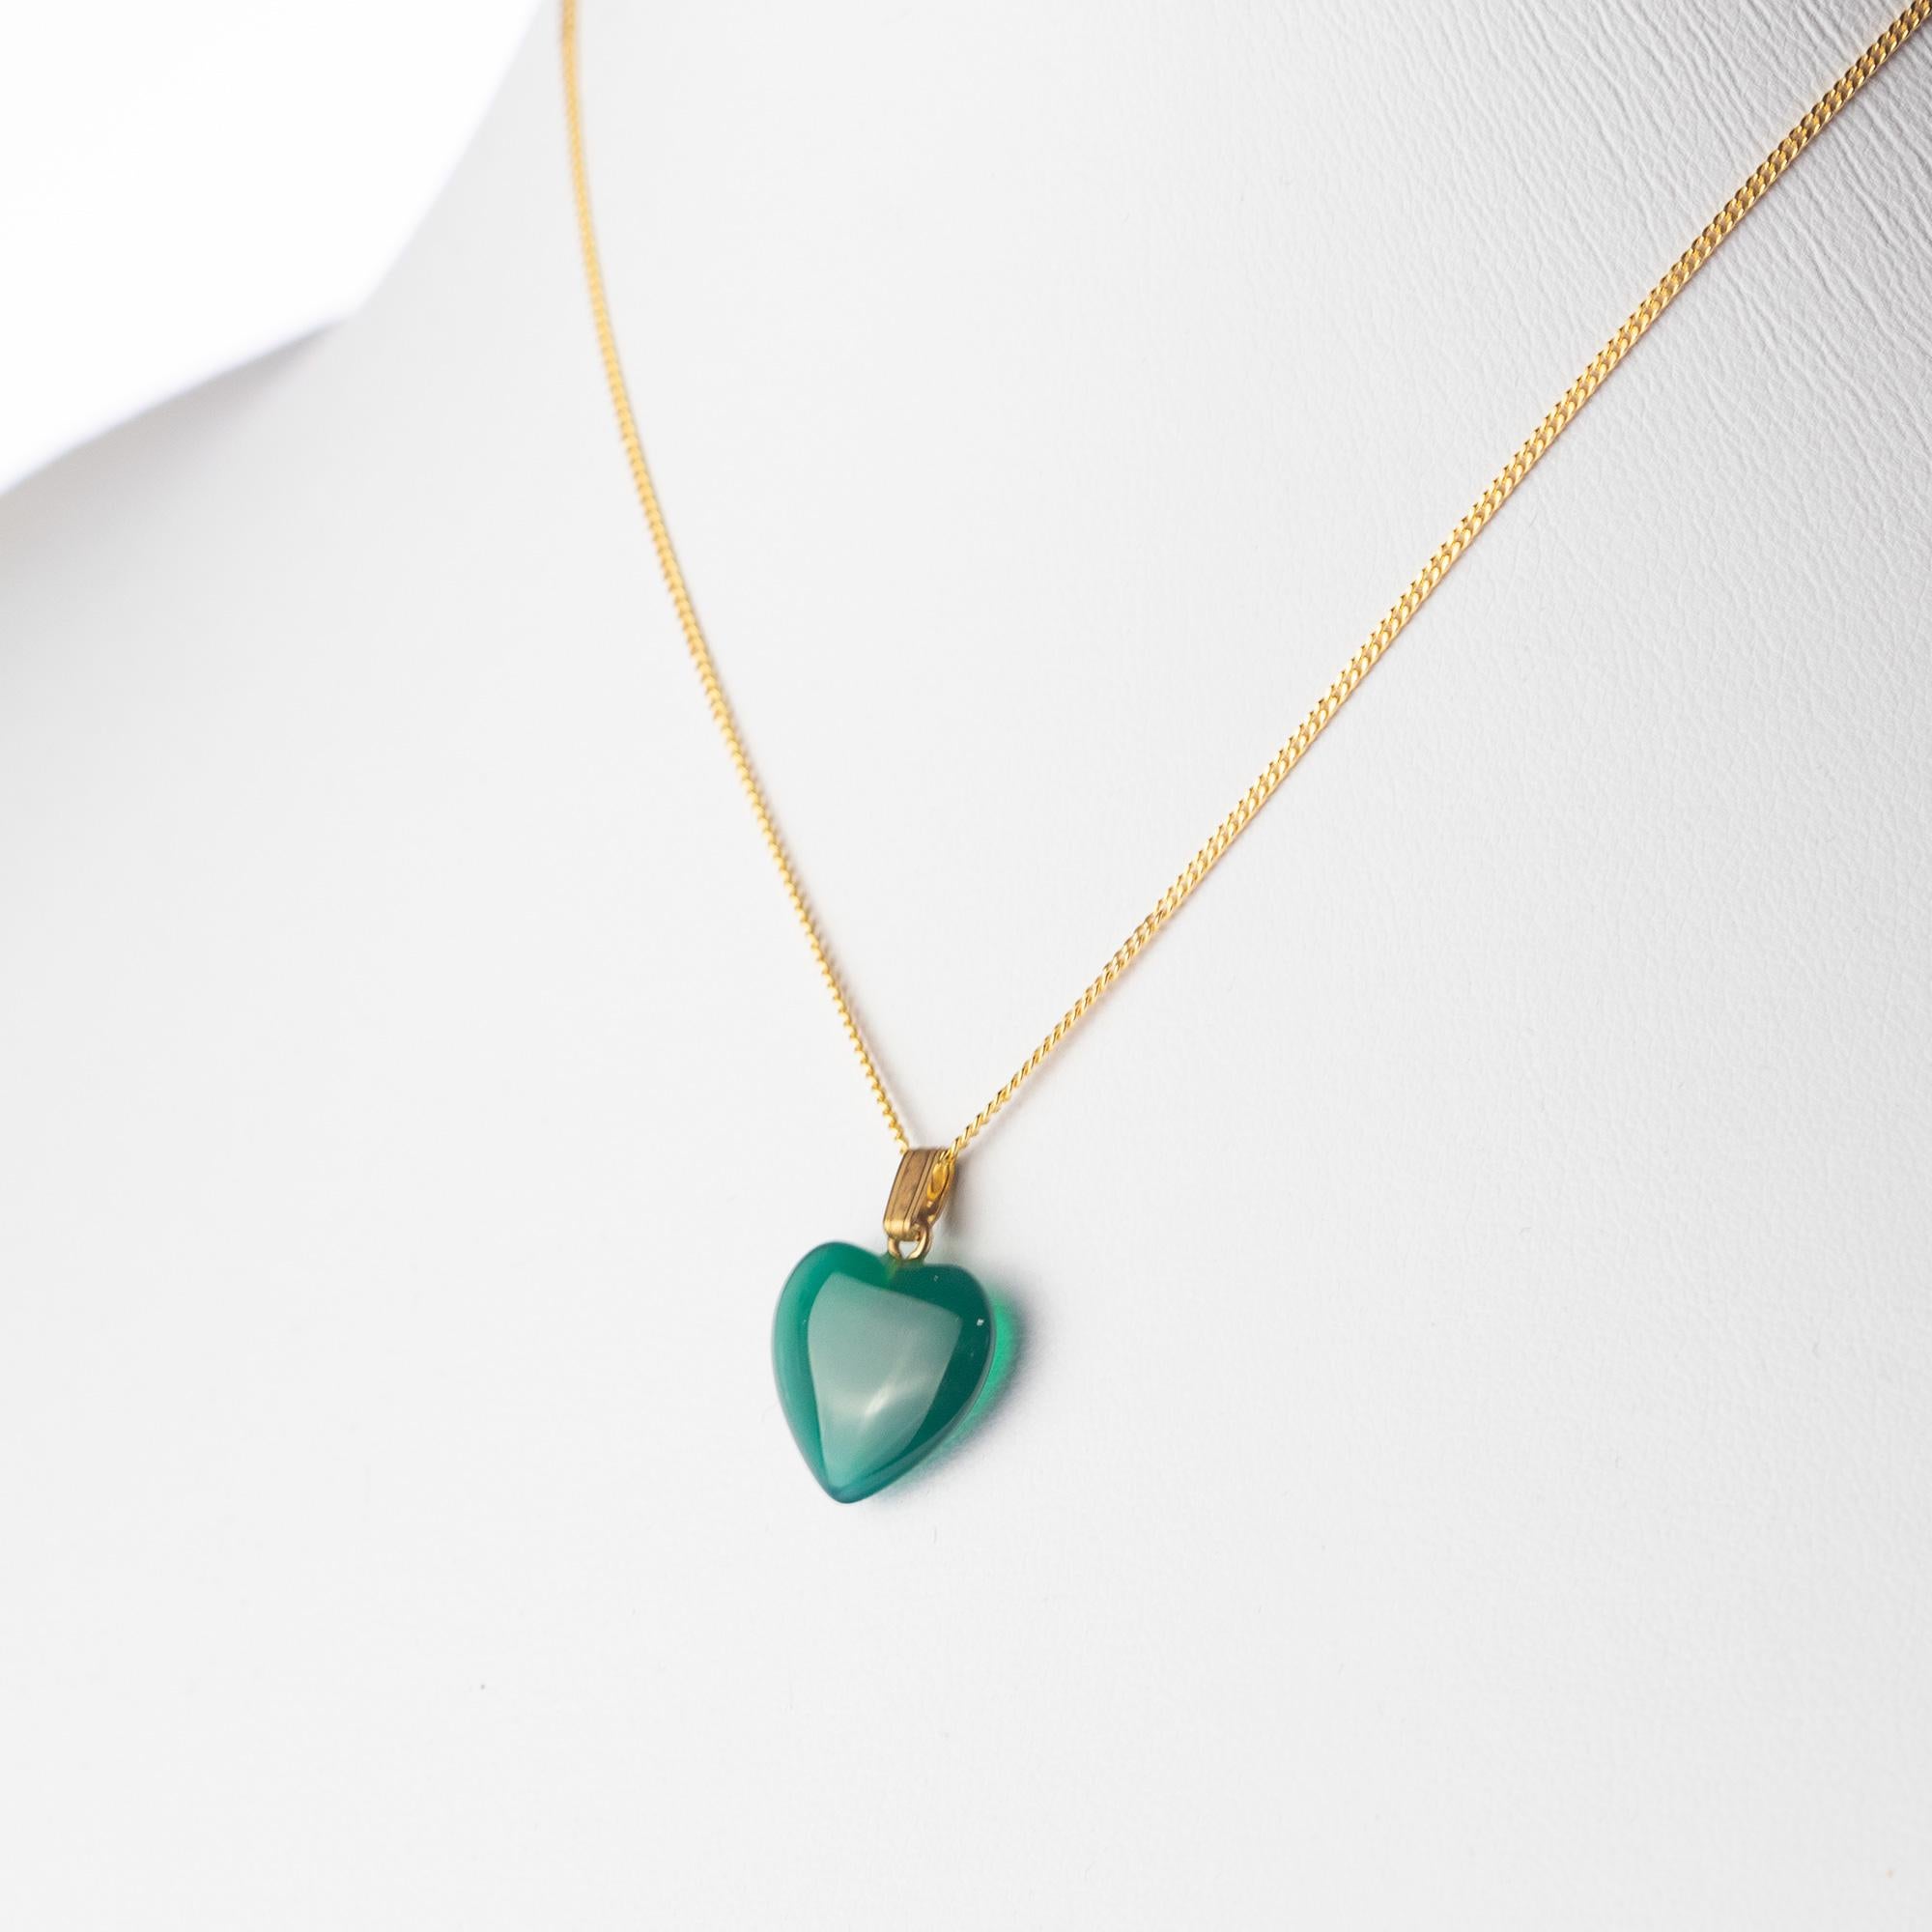 Romantic Intini Jewels Natural Quartz Heart Pendant 9 Karat Gold Chain Love Necklace